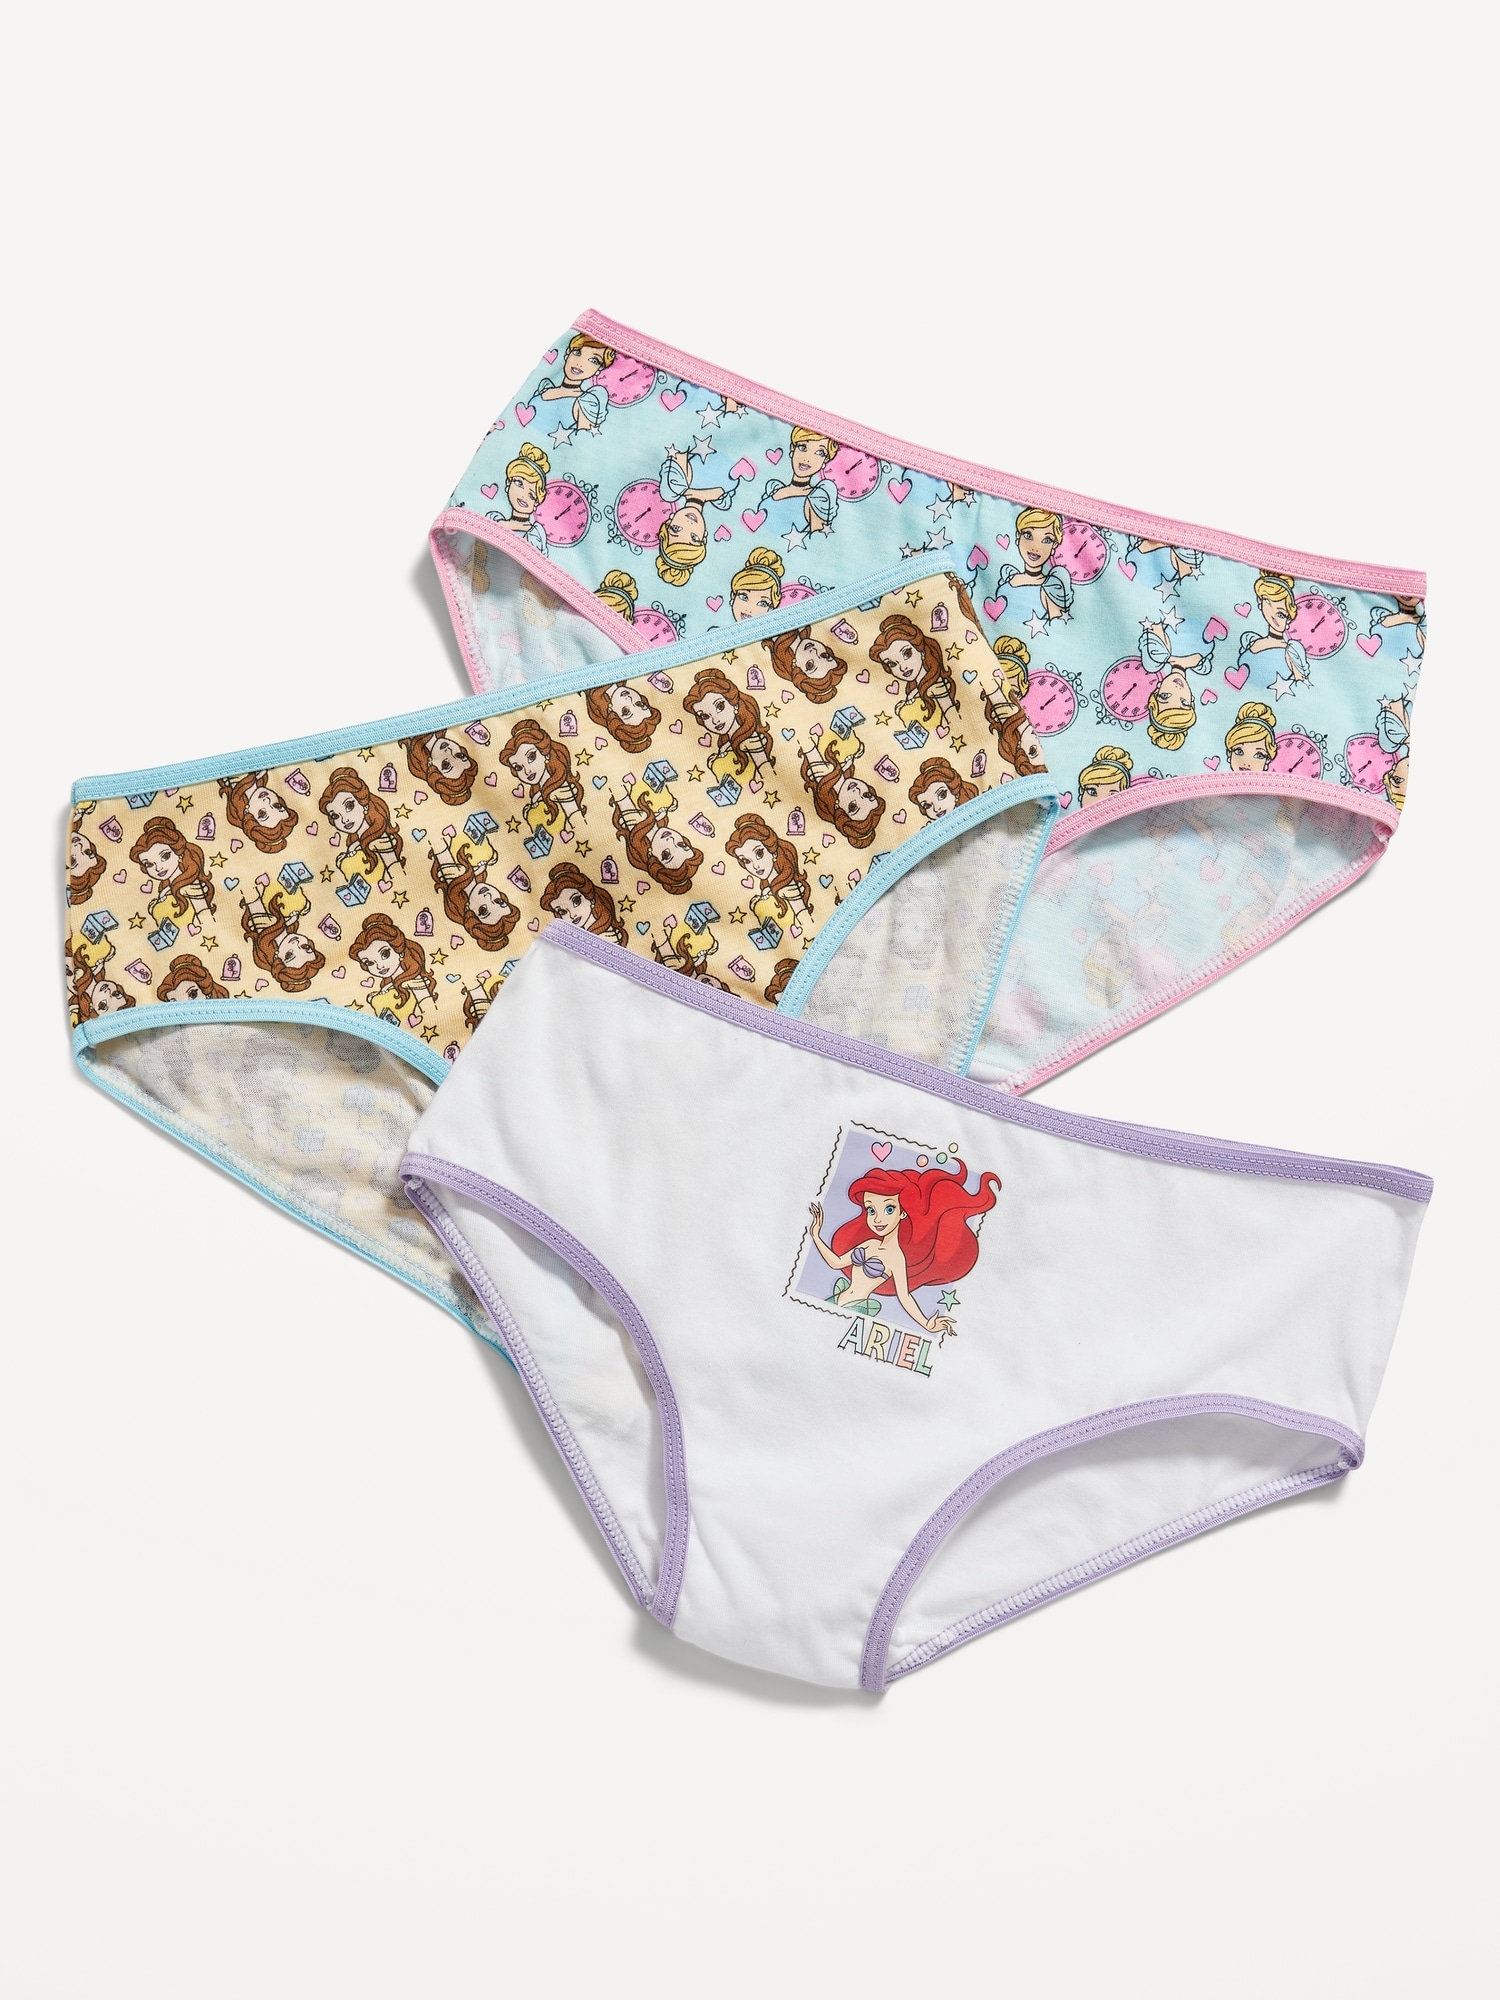 Disney Lilo & Stitch Girls 3PK Hipsters Knickers, Pack of 3 Girls Underwear